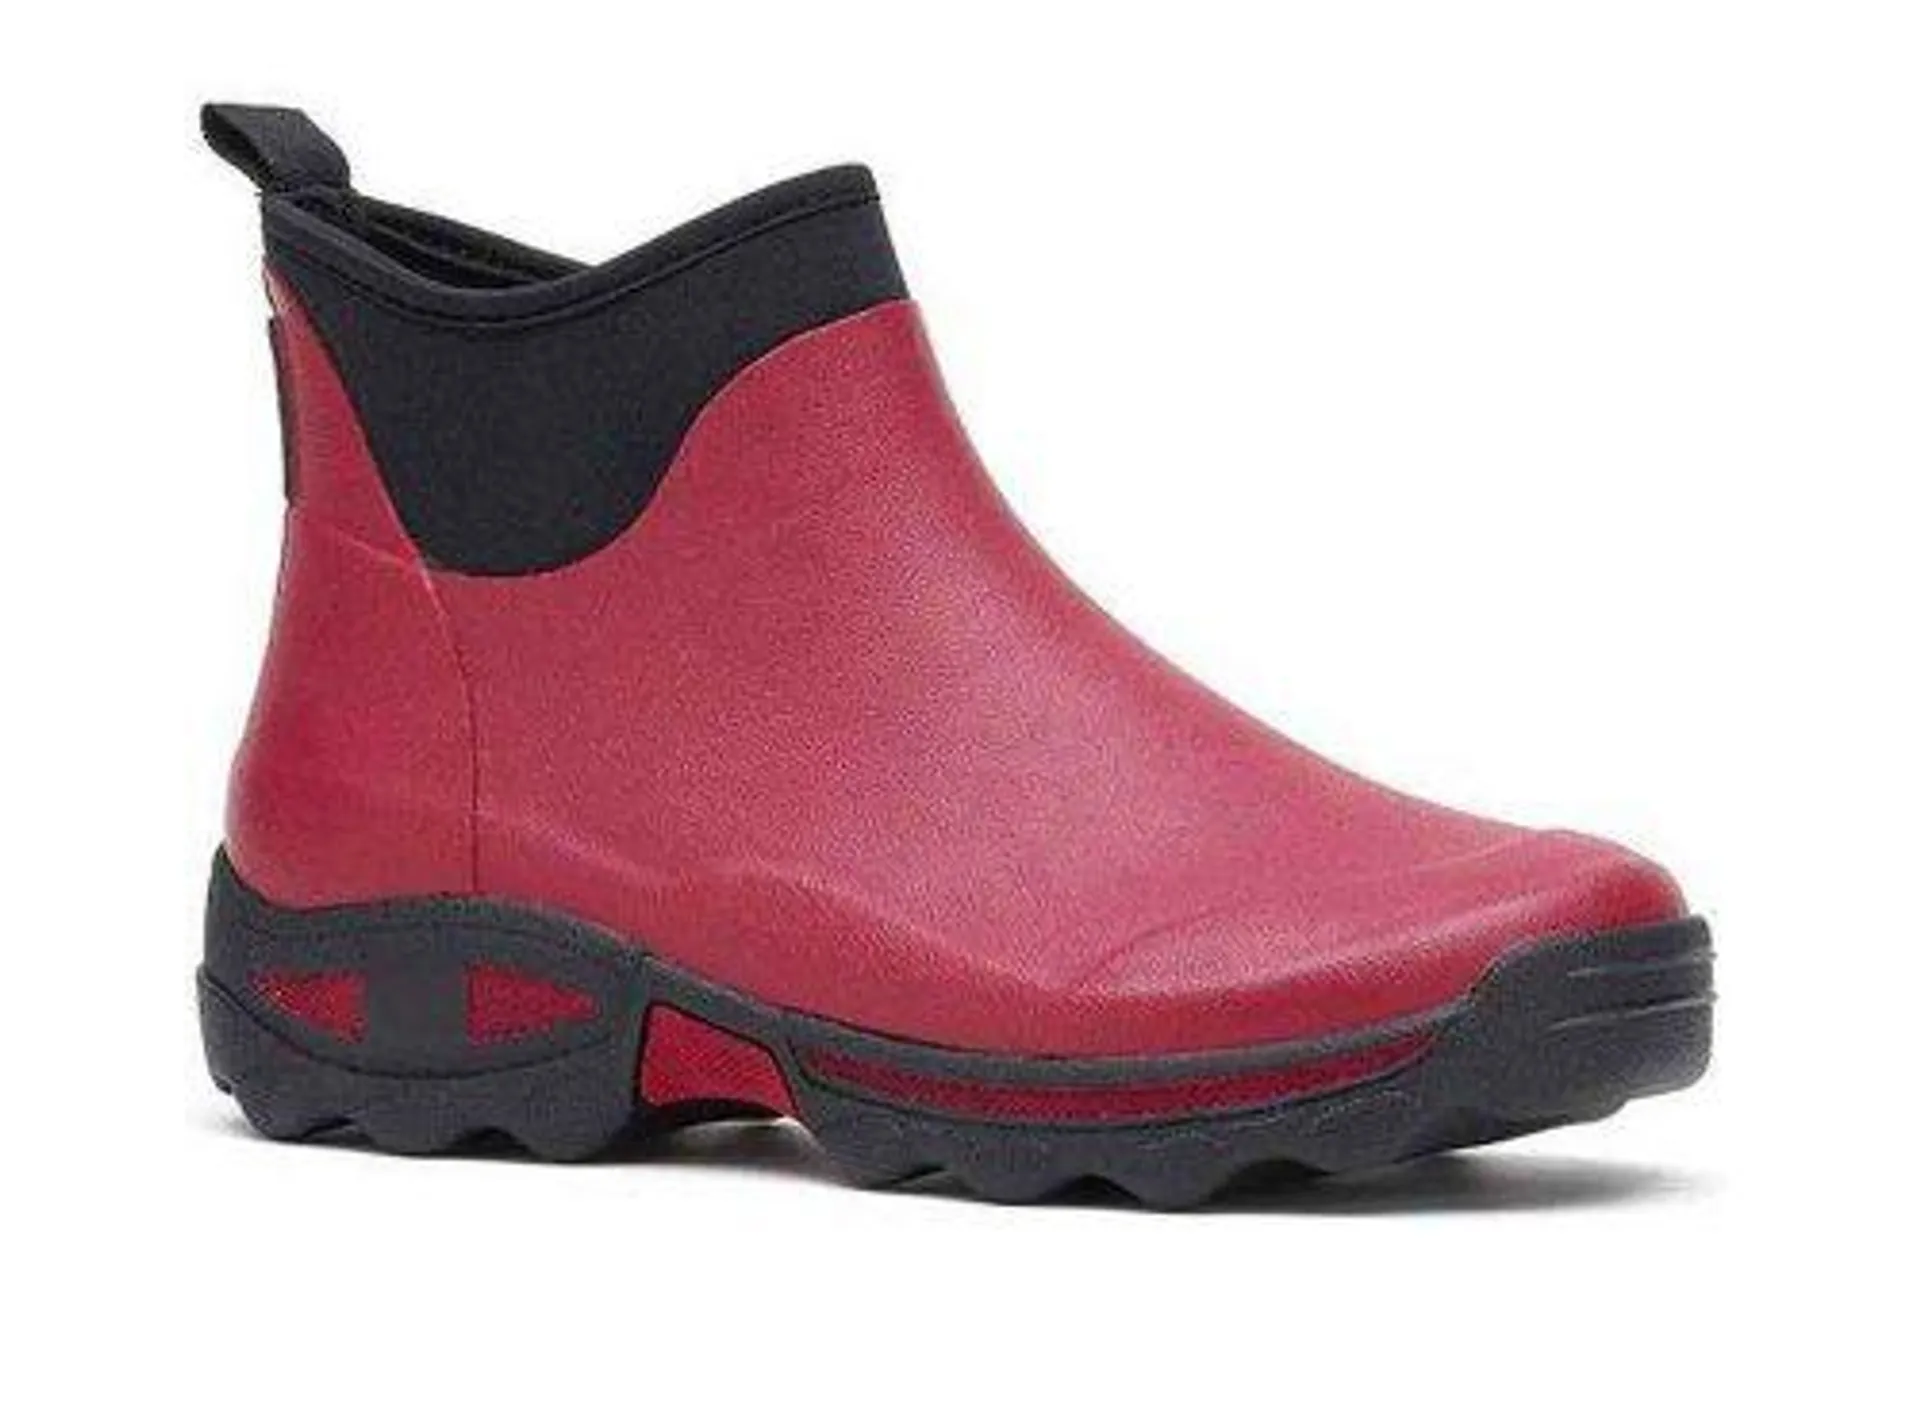 Ladies Ankle Boot Burgundy - Size 39EU / 6UK